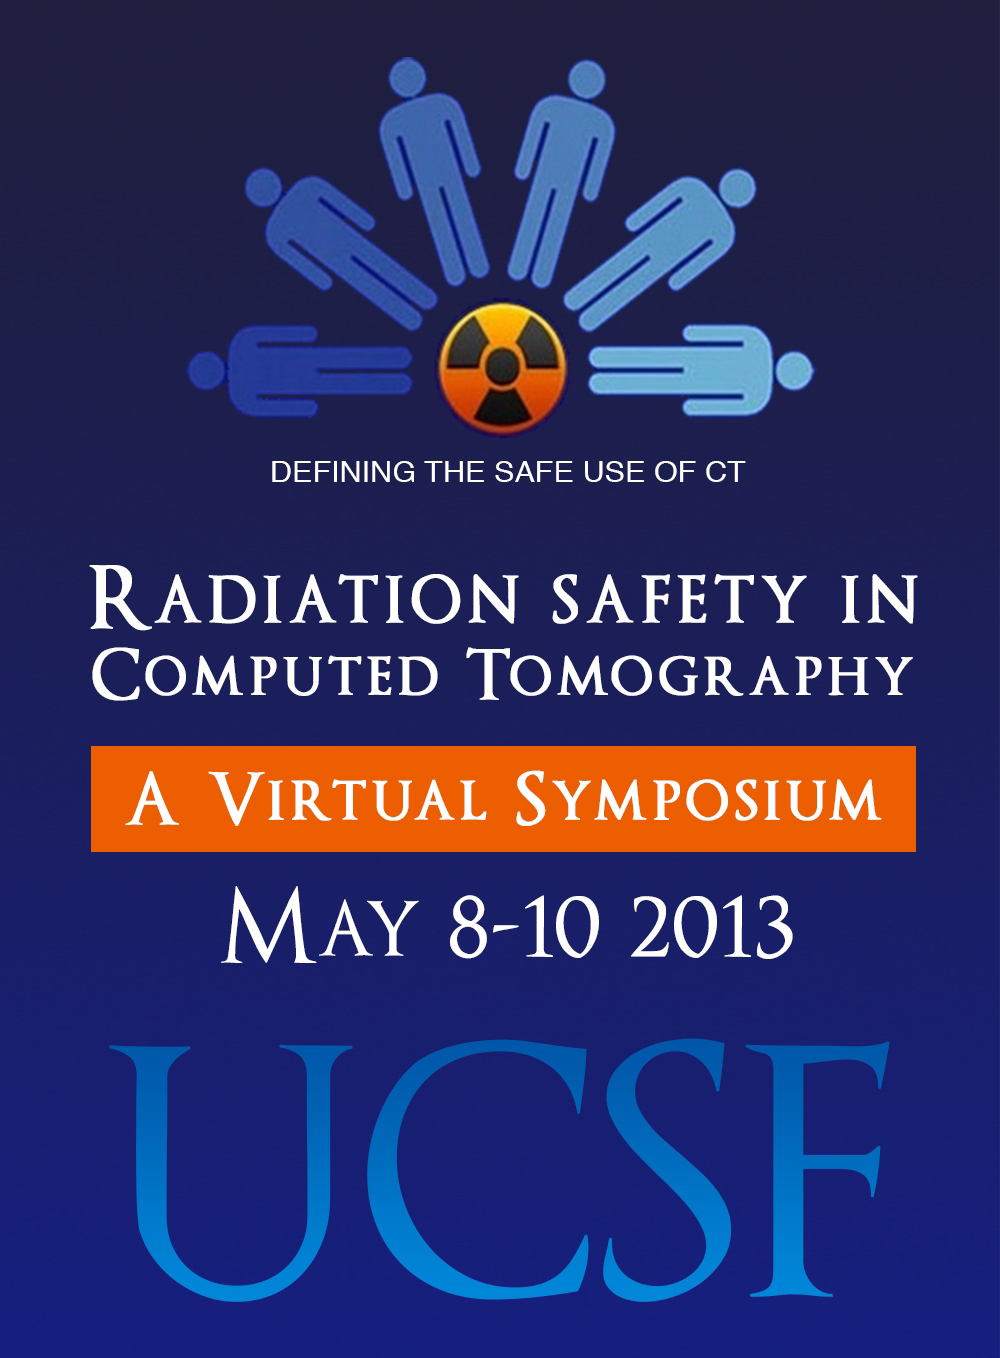 Virtual Symposium on Radiation Safety